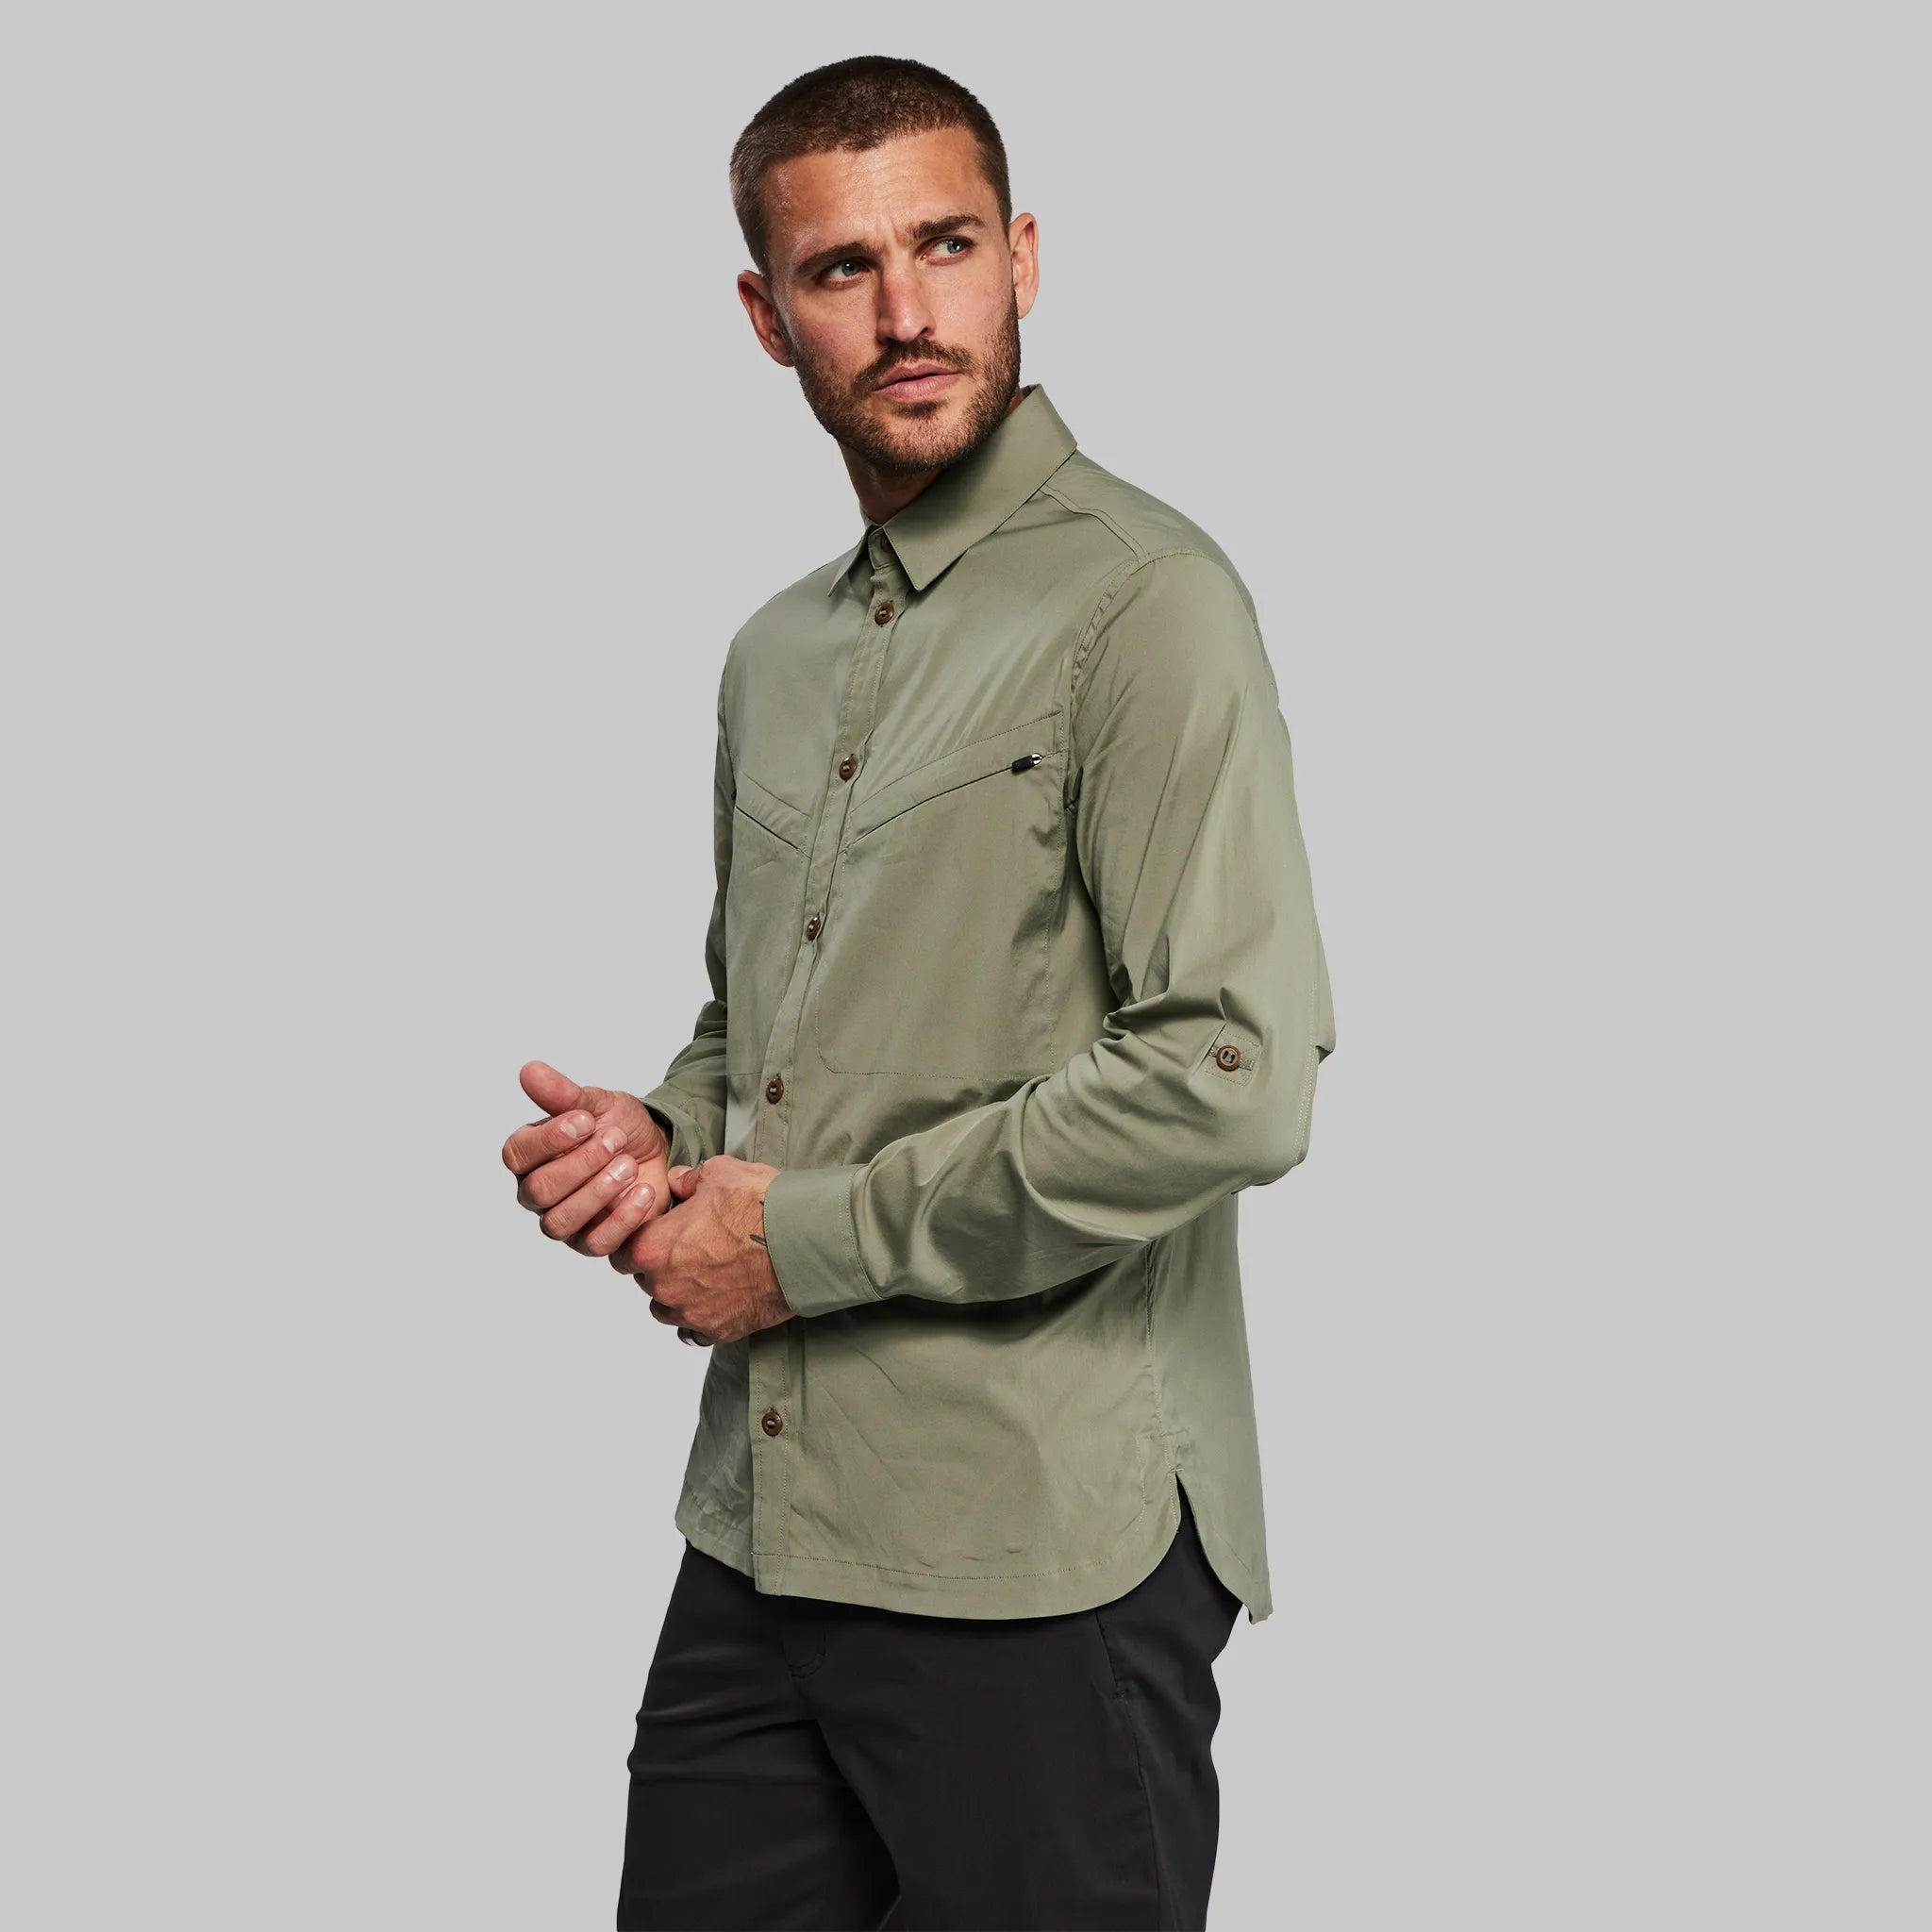 Equator Shirt with Collar. Grey-Green edition